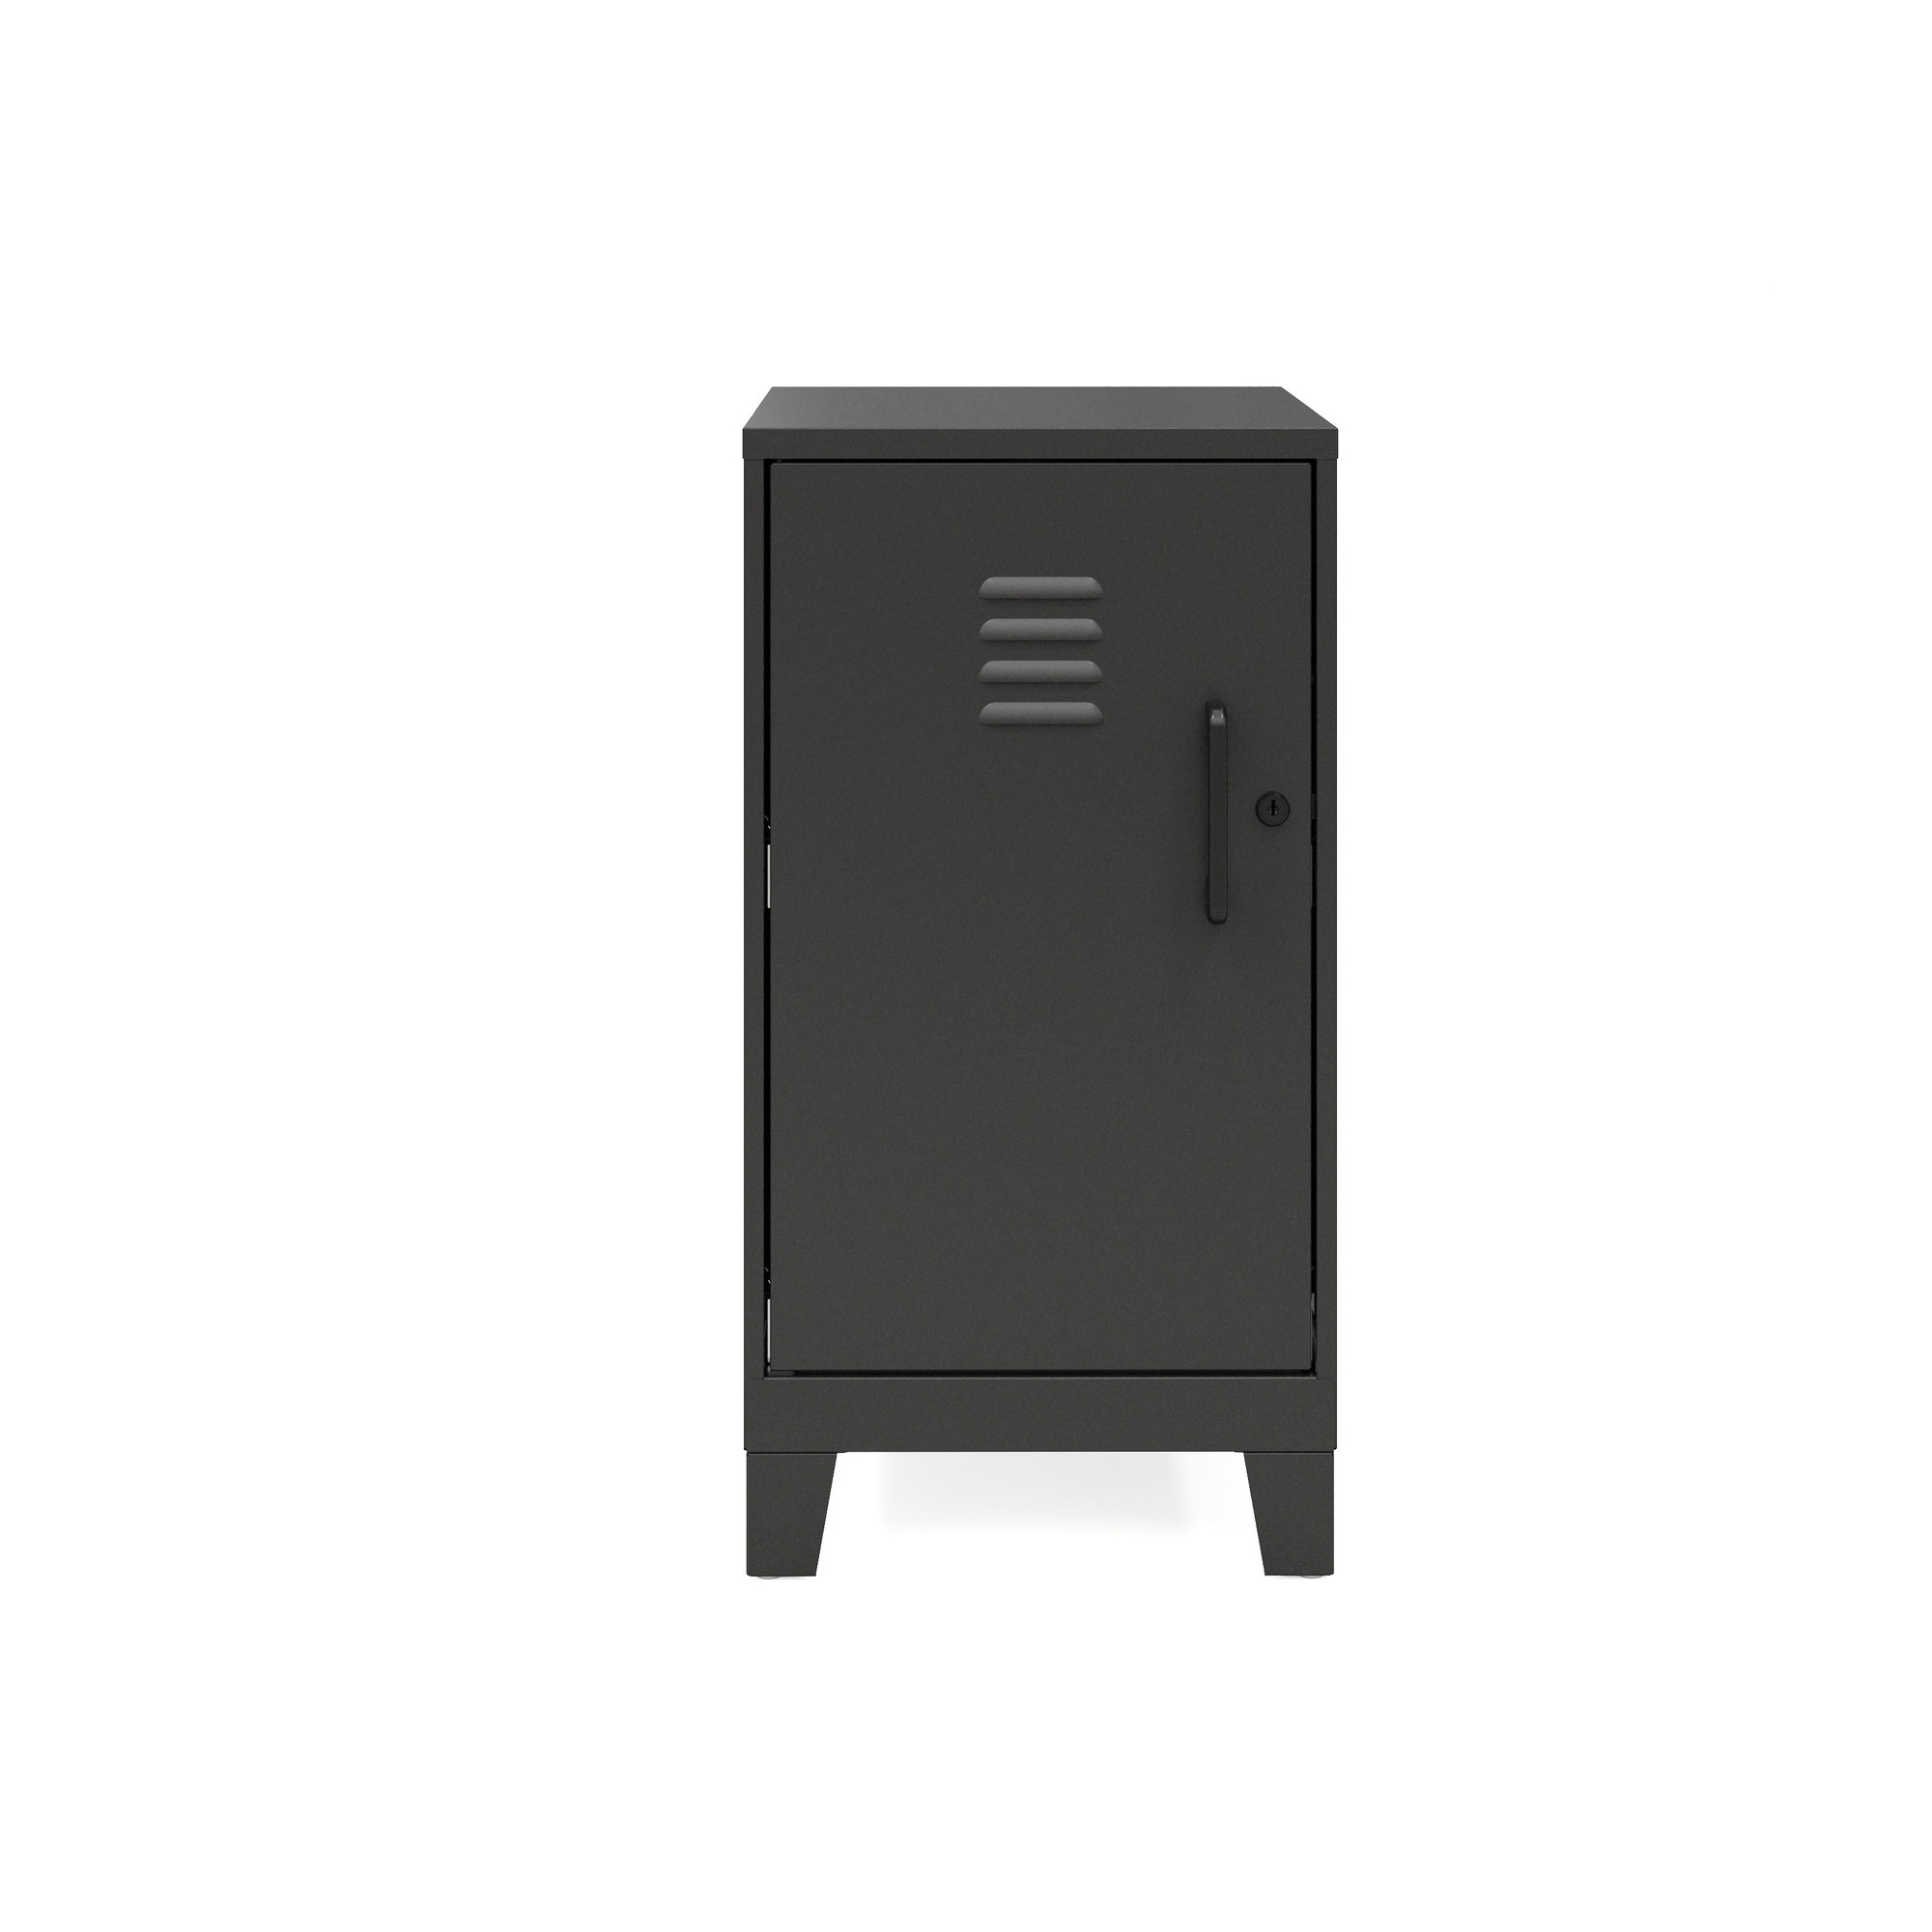 Hirsh Industries, 2 Shelf Mini Storage Locker Cabinet, Height 27.5 in, Width 14.25 in, Color Black, Model 25219